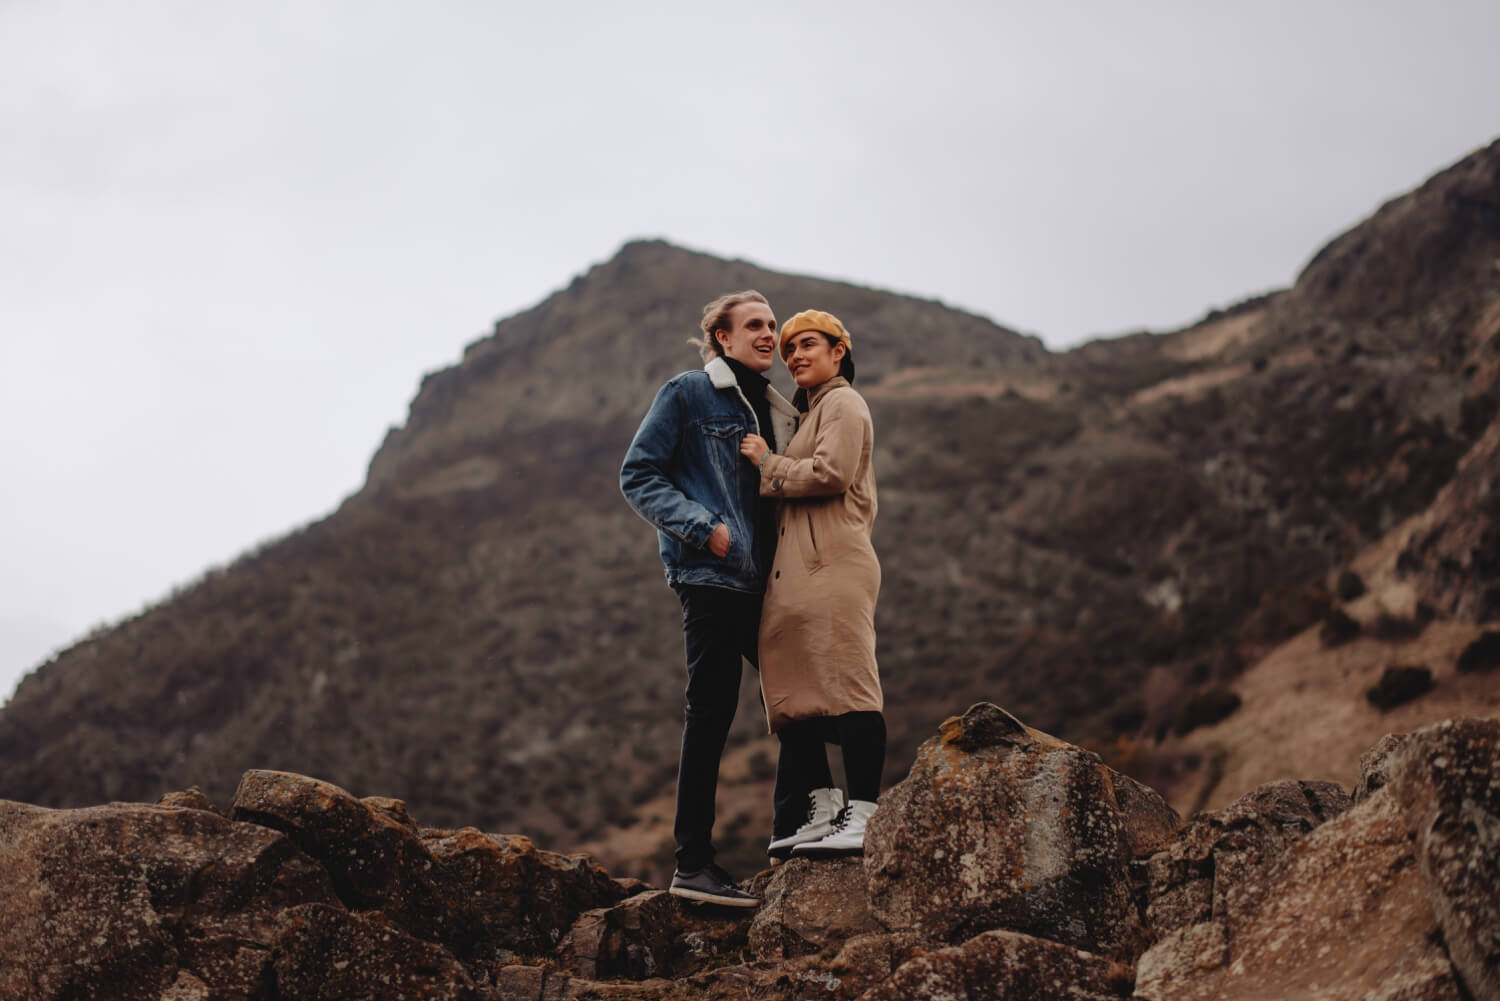 Scotland Couple Photoshoot - Destination wedding photographer - The Adamkovi, scotland highlands